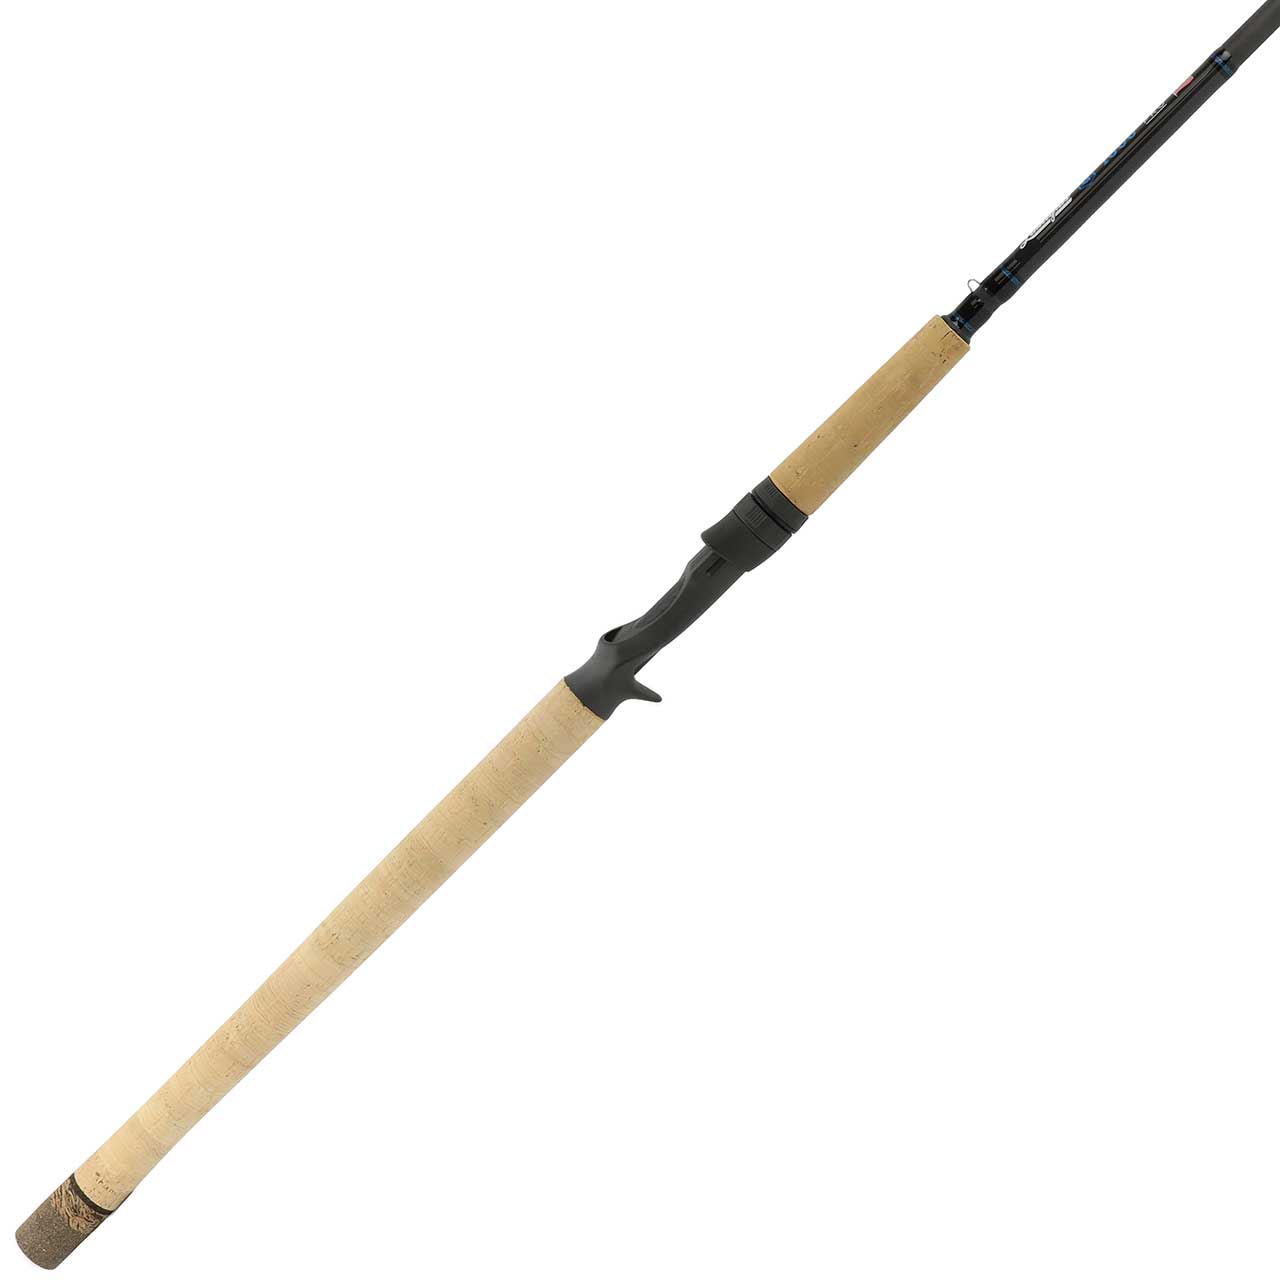 Buy Fishing Rod Casting 1 Piece online